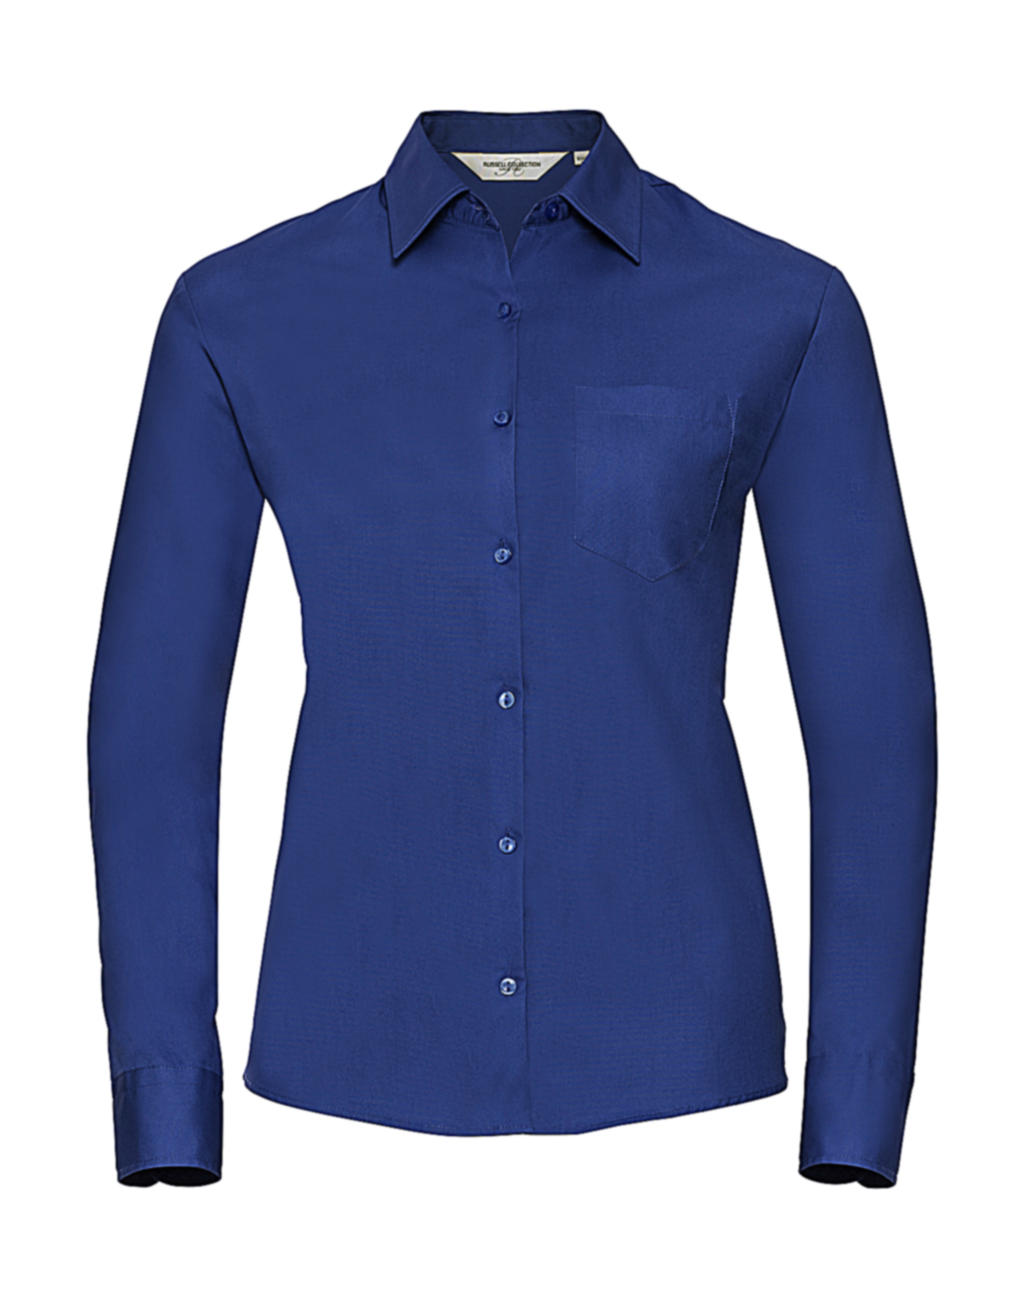  Ladies Cotton Poplin Shirt LS in Farbe Aztec Blue